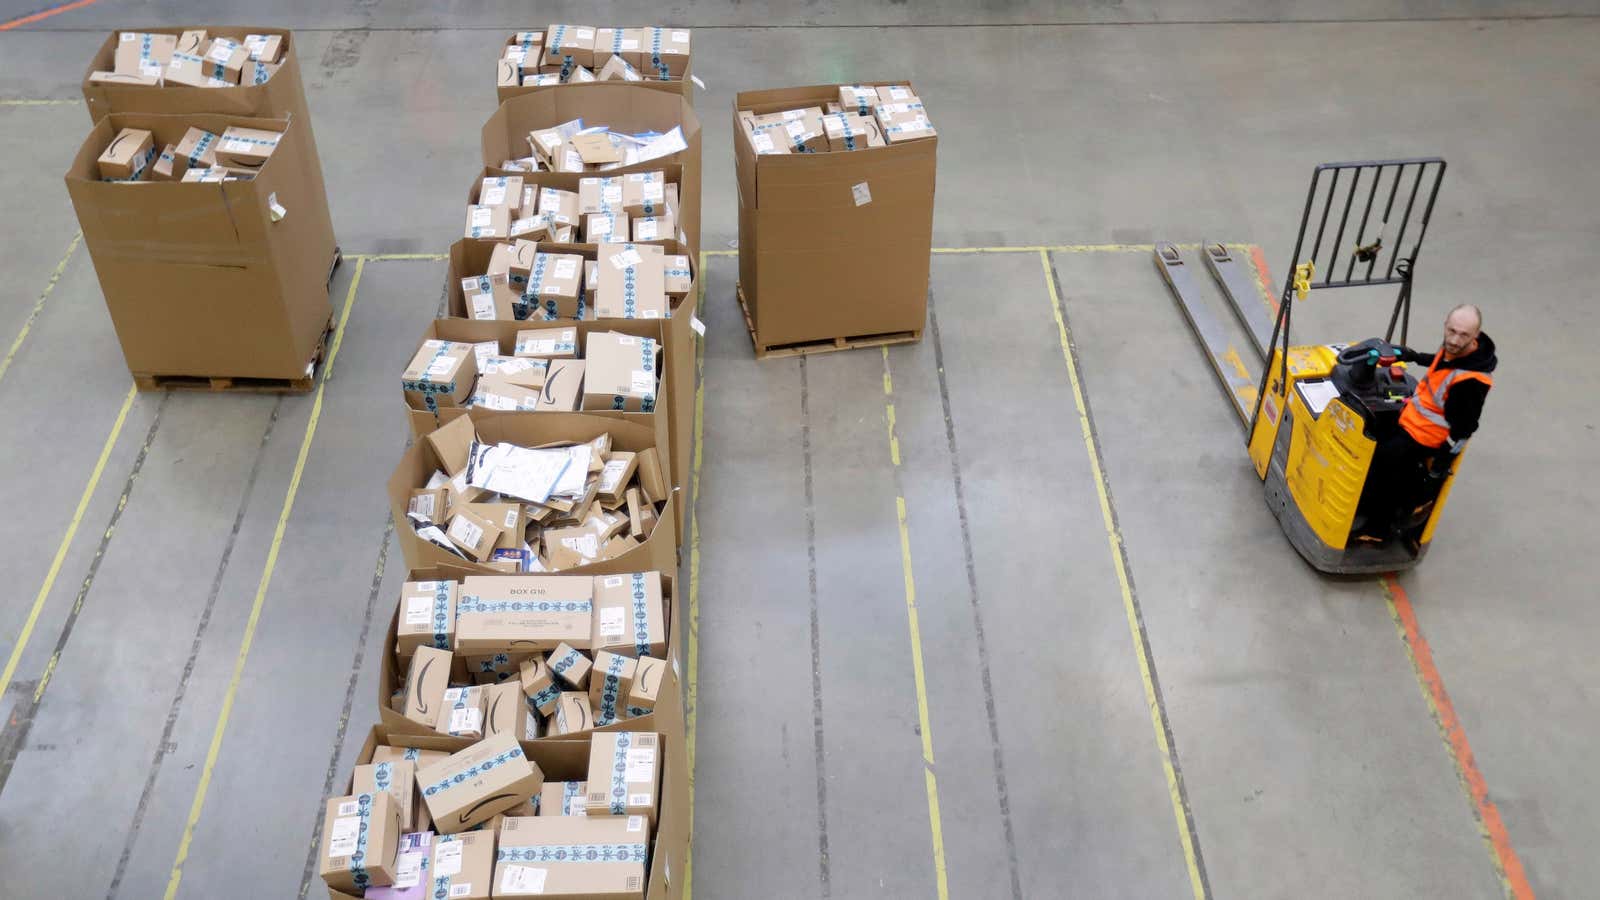 Amazon stopped taking orders.